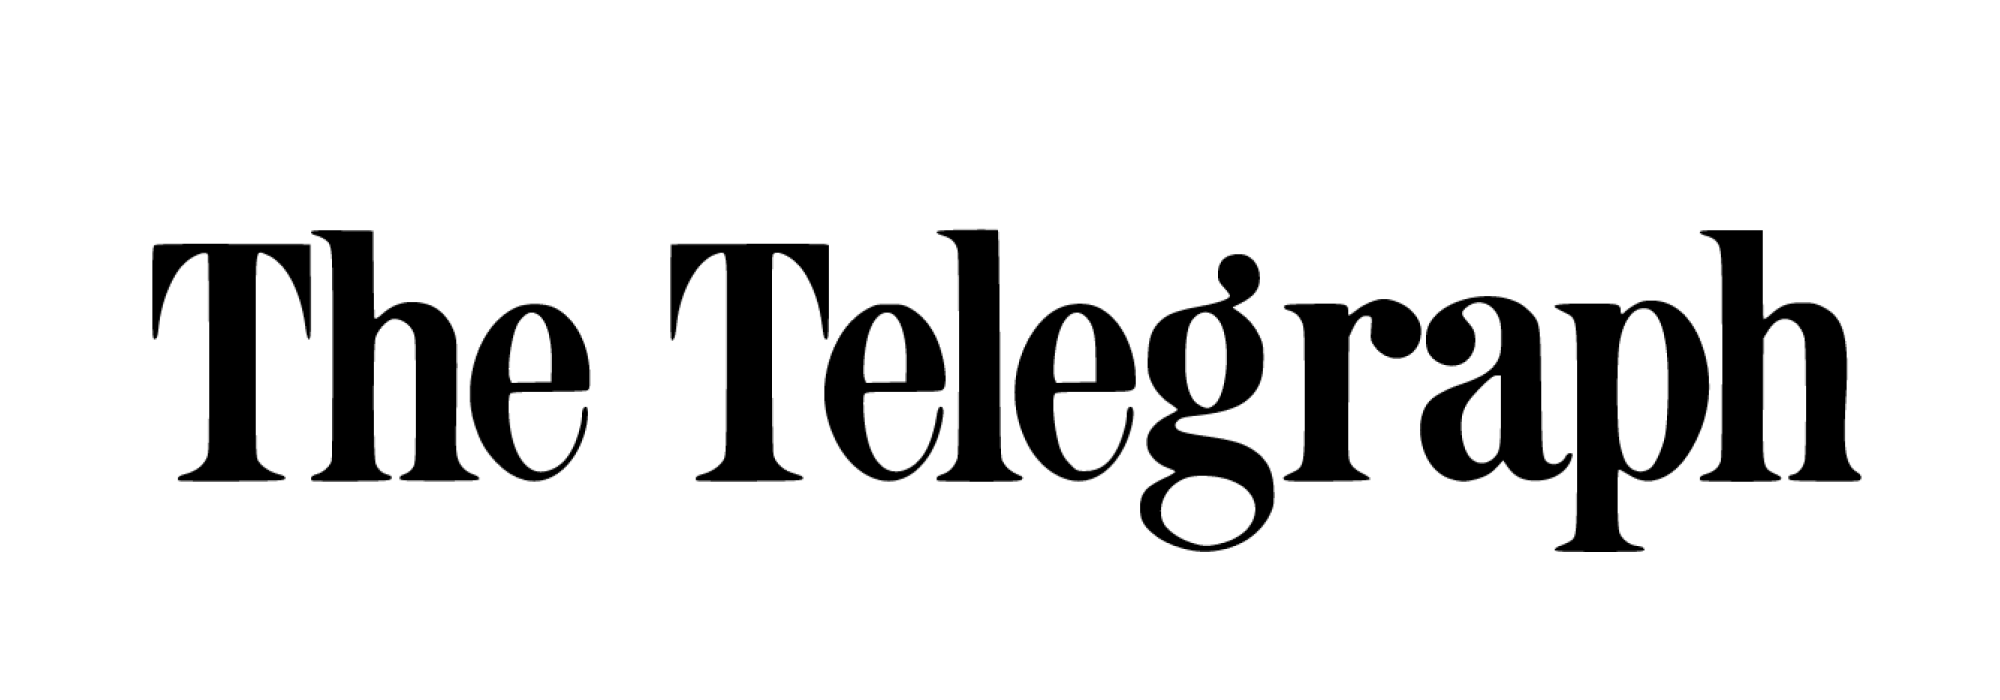 telegraph-1